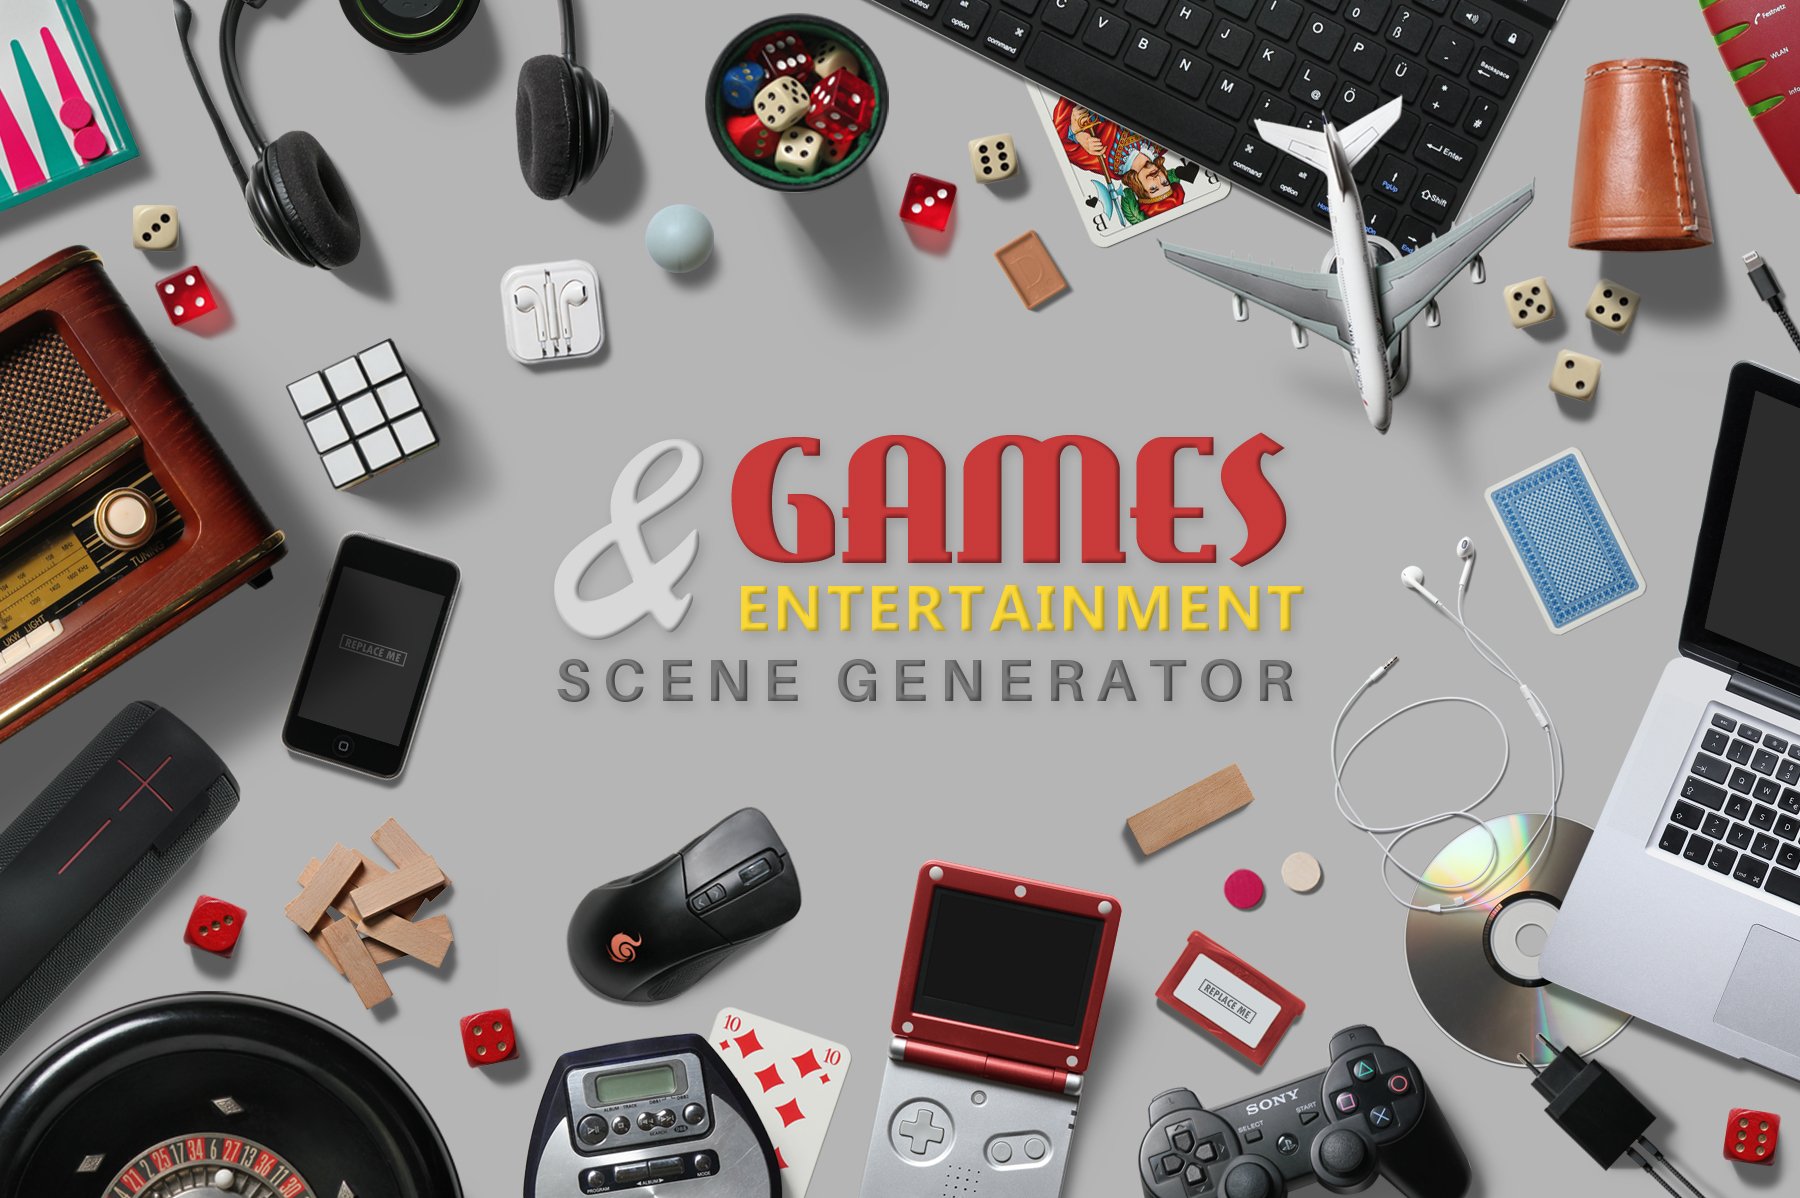 Games & Entertainment Scene Creator cover image.